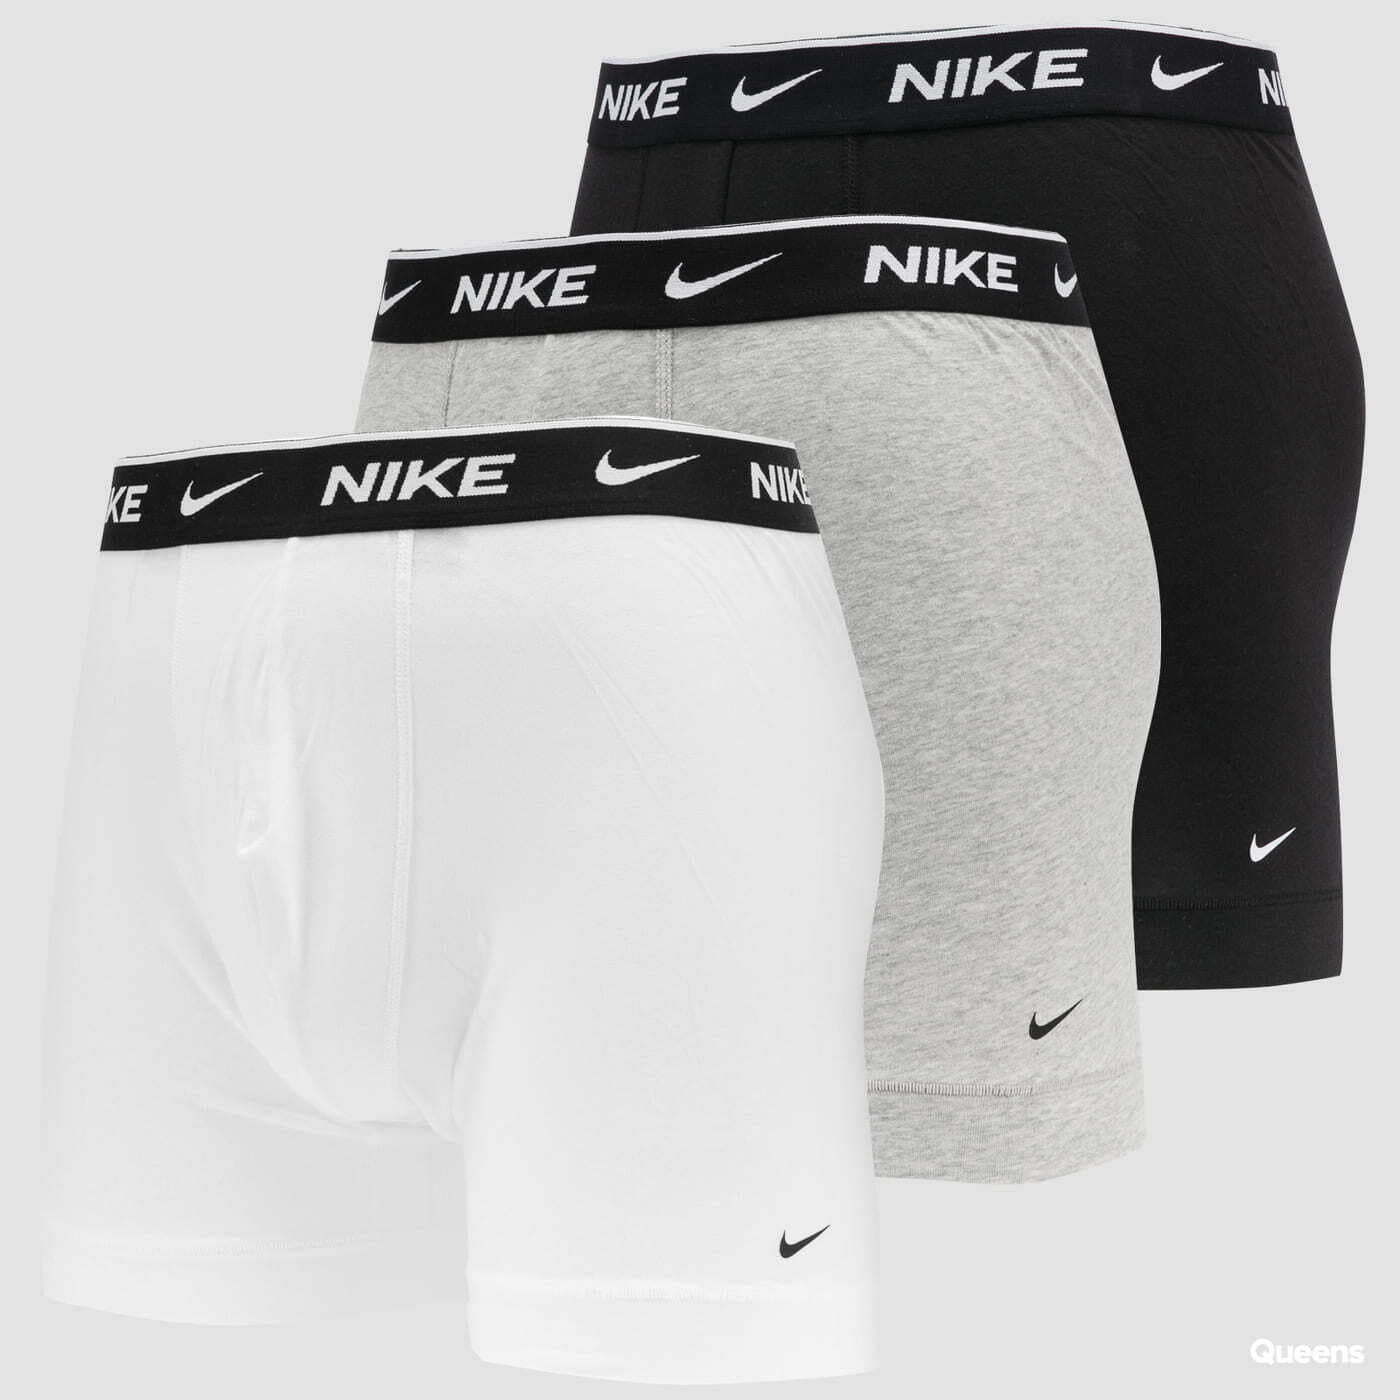 Boxer shorts Nike Boxer Brief 3Pack C/O Black/ Melange Grey/ White